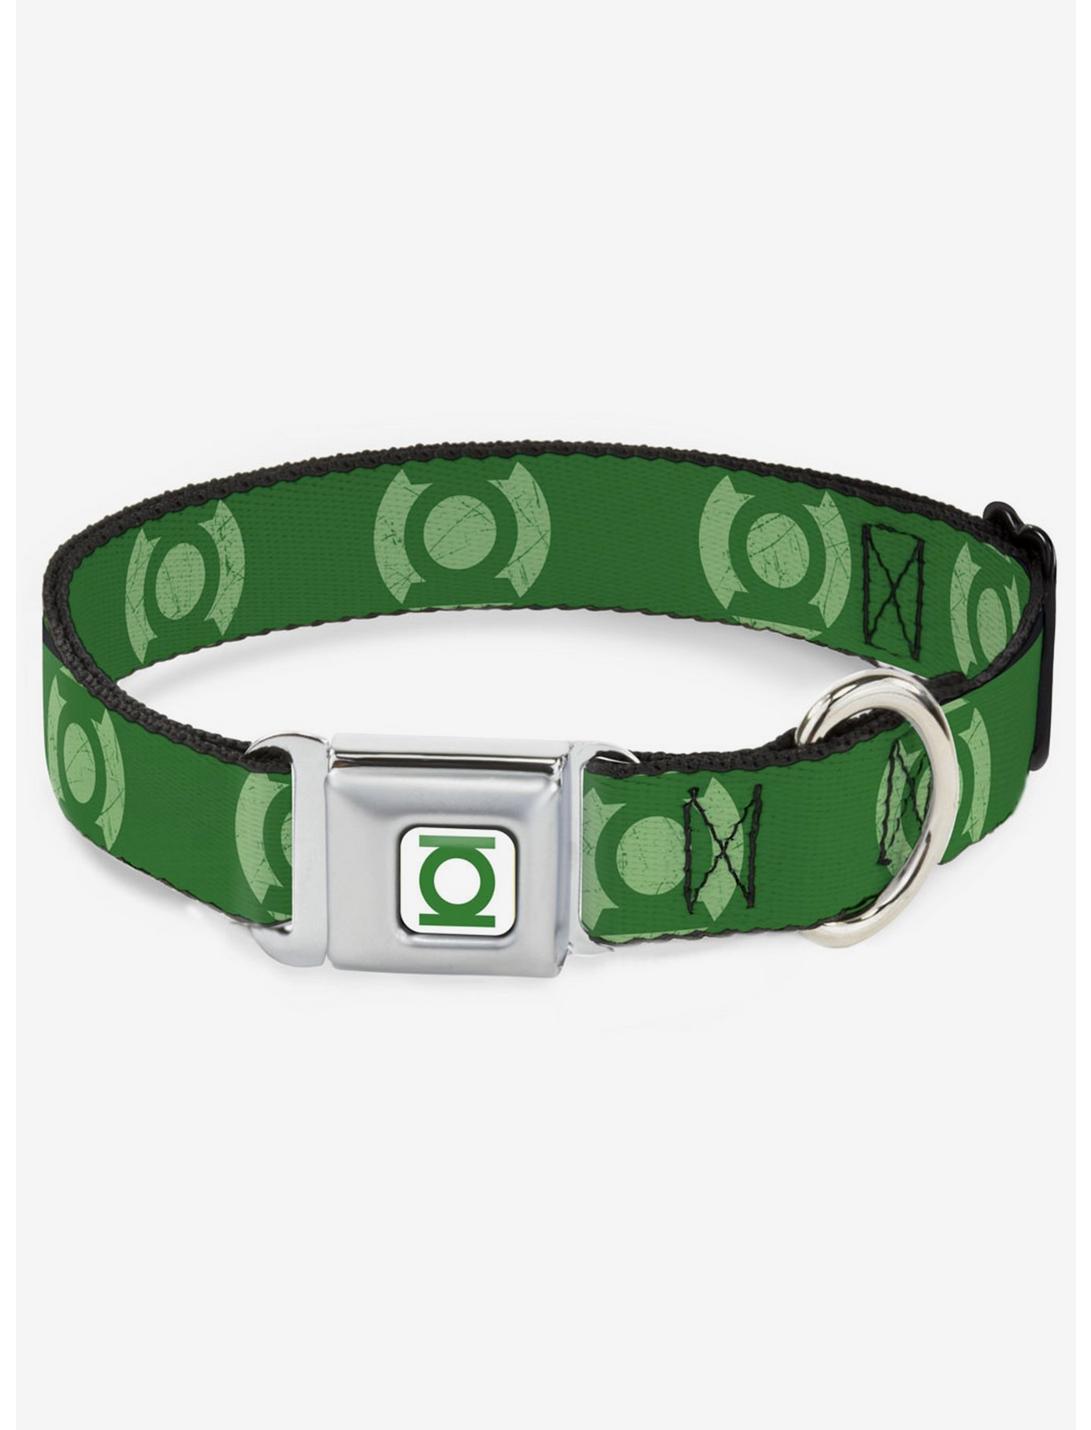 DC Comics Justice League Green Lantern Logo Weathered Greens Seatbelt Buckle Dog Collar, GREEN, hi-res